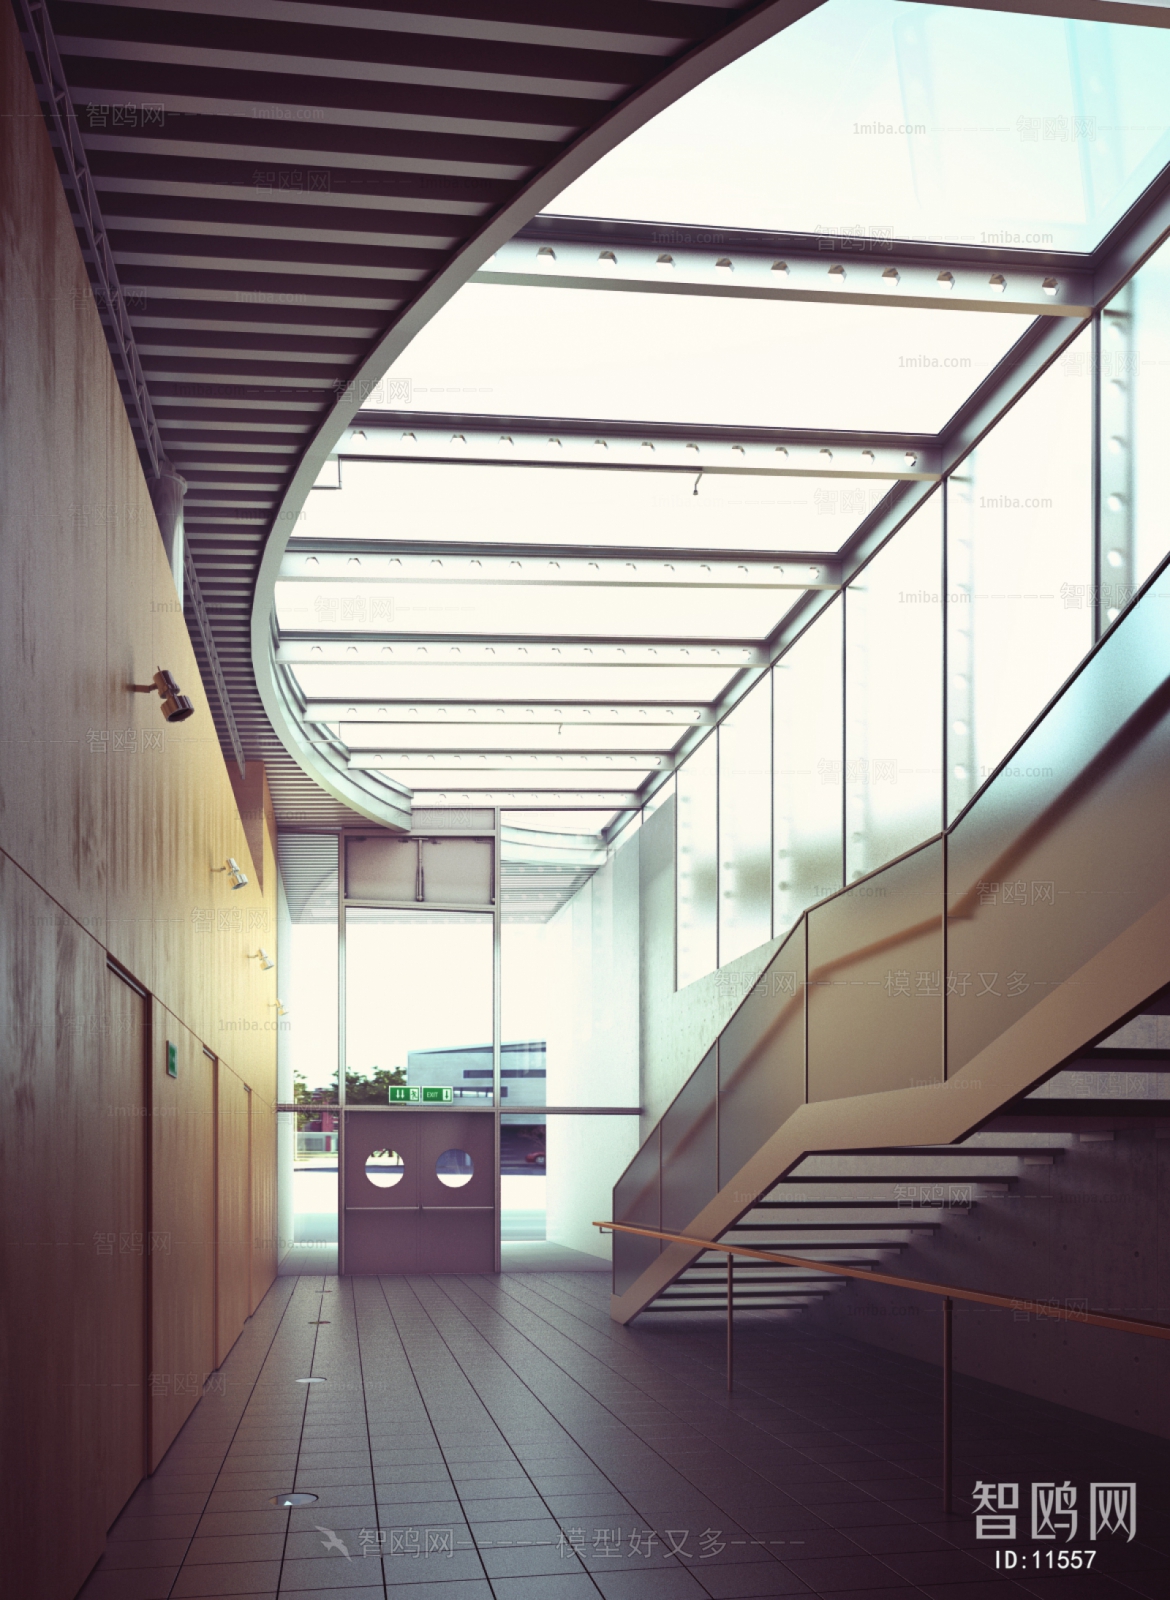 Modern LOFT Corridor/elevator Hall